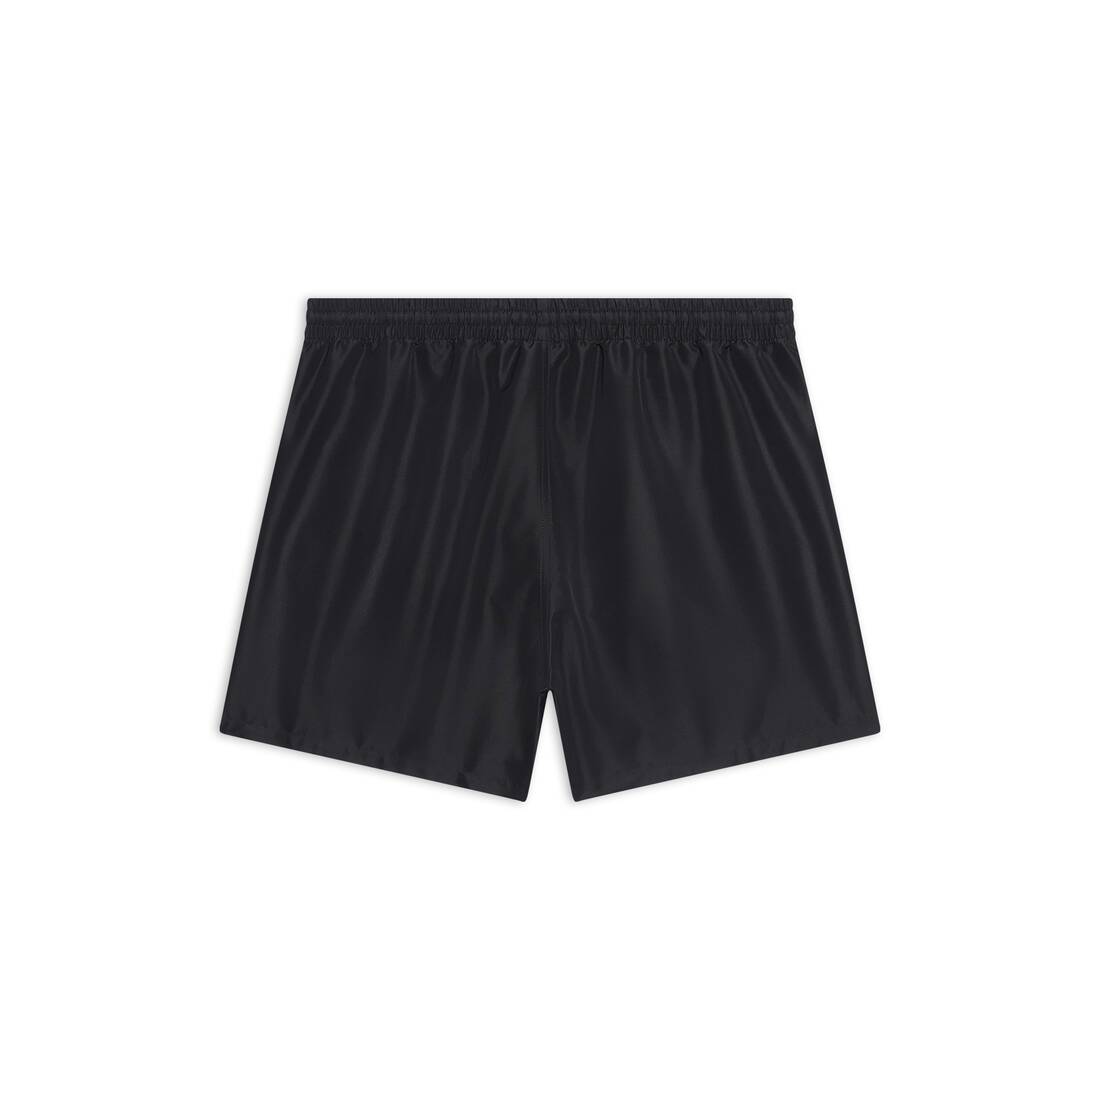 Free Shorts, Trouser Mockup PSD - PsFiles